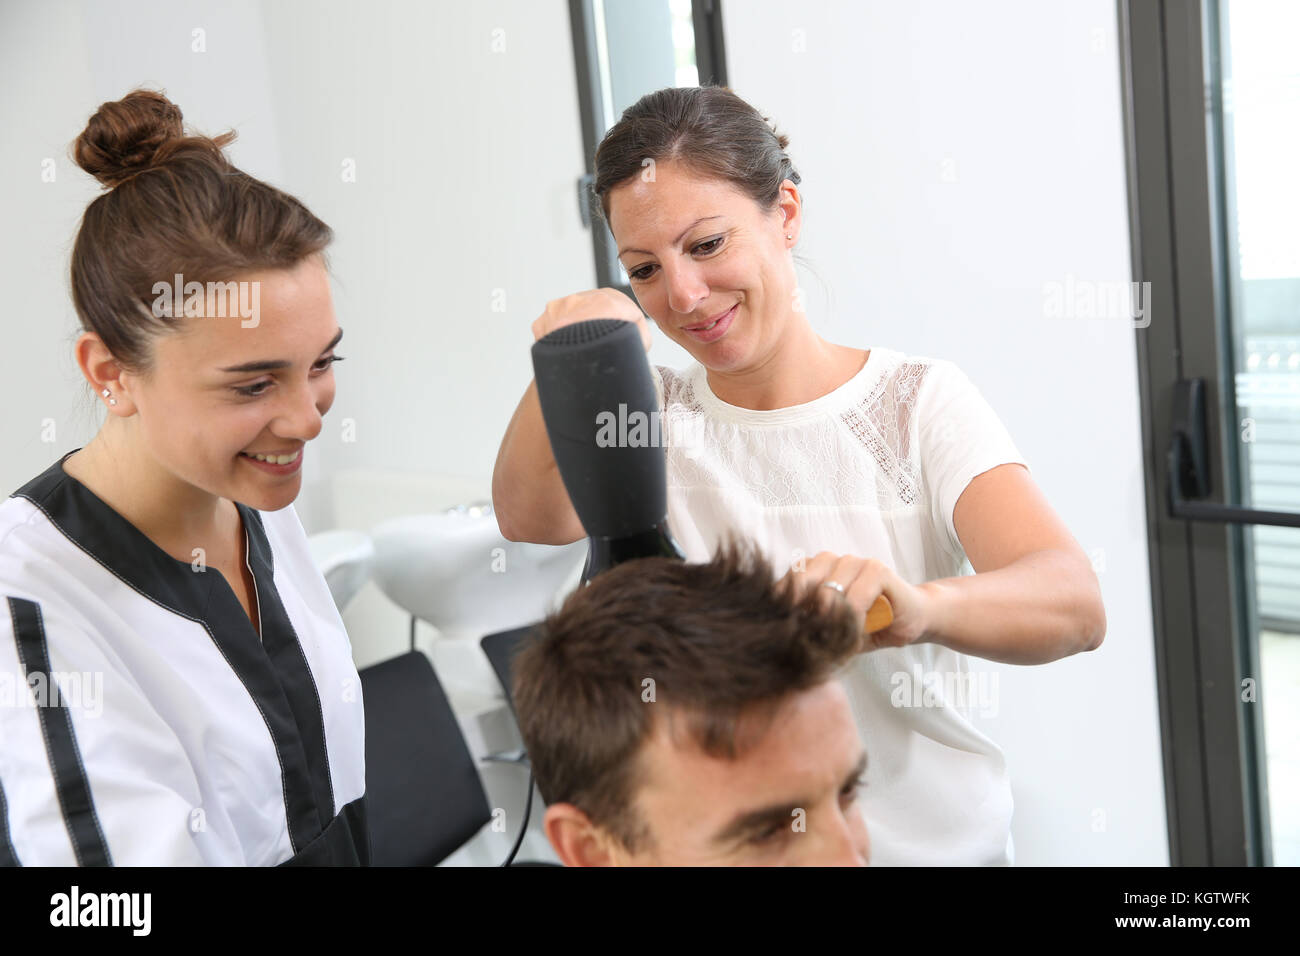 Hairstyle training class in beauty salon Stock Photo - Alamy